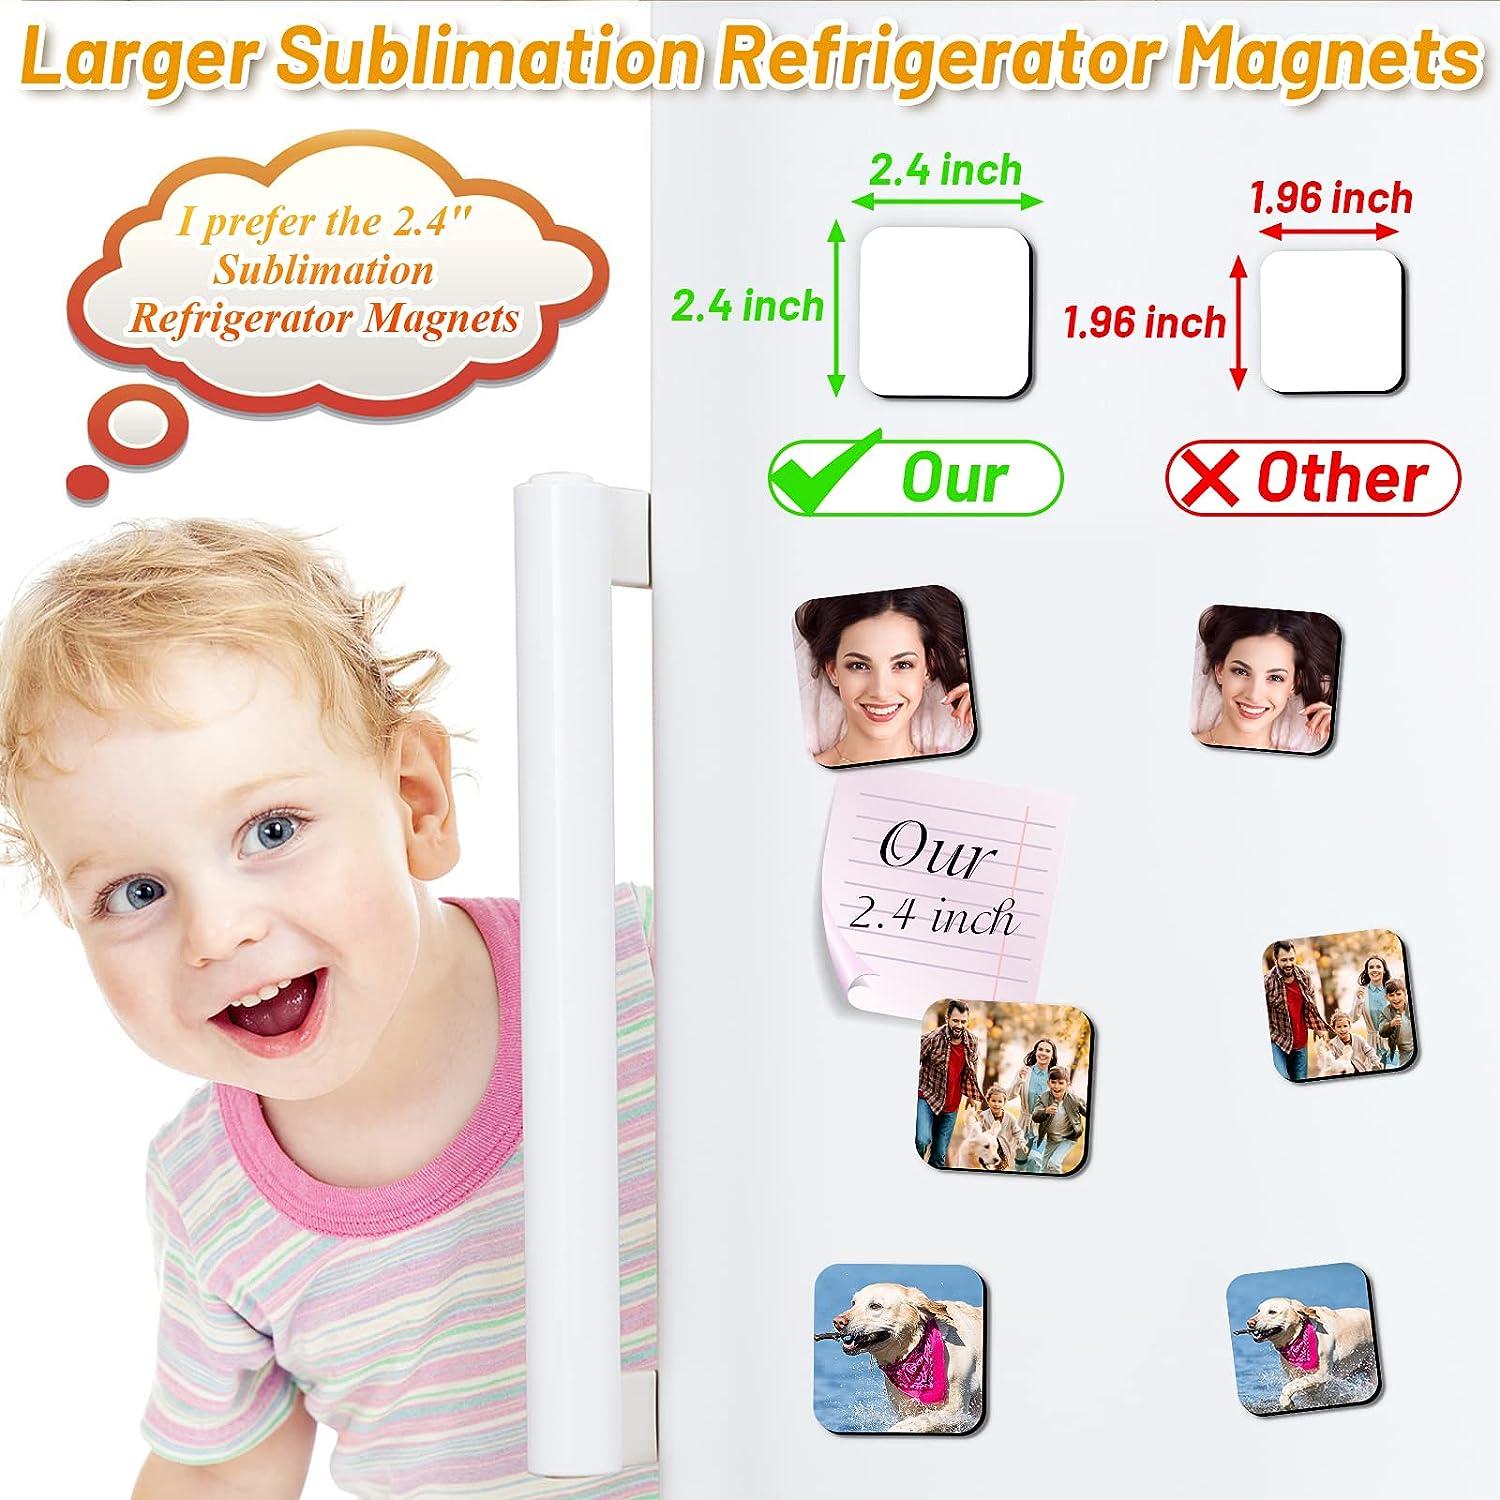 Sublimation Magnets/ Sublimation Refrigerator Magnets/ Large